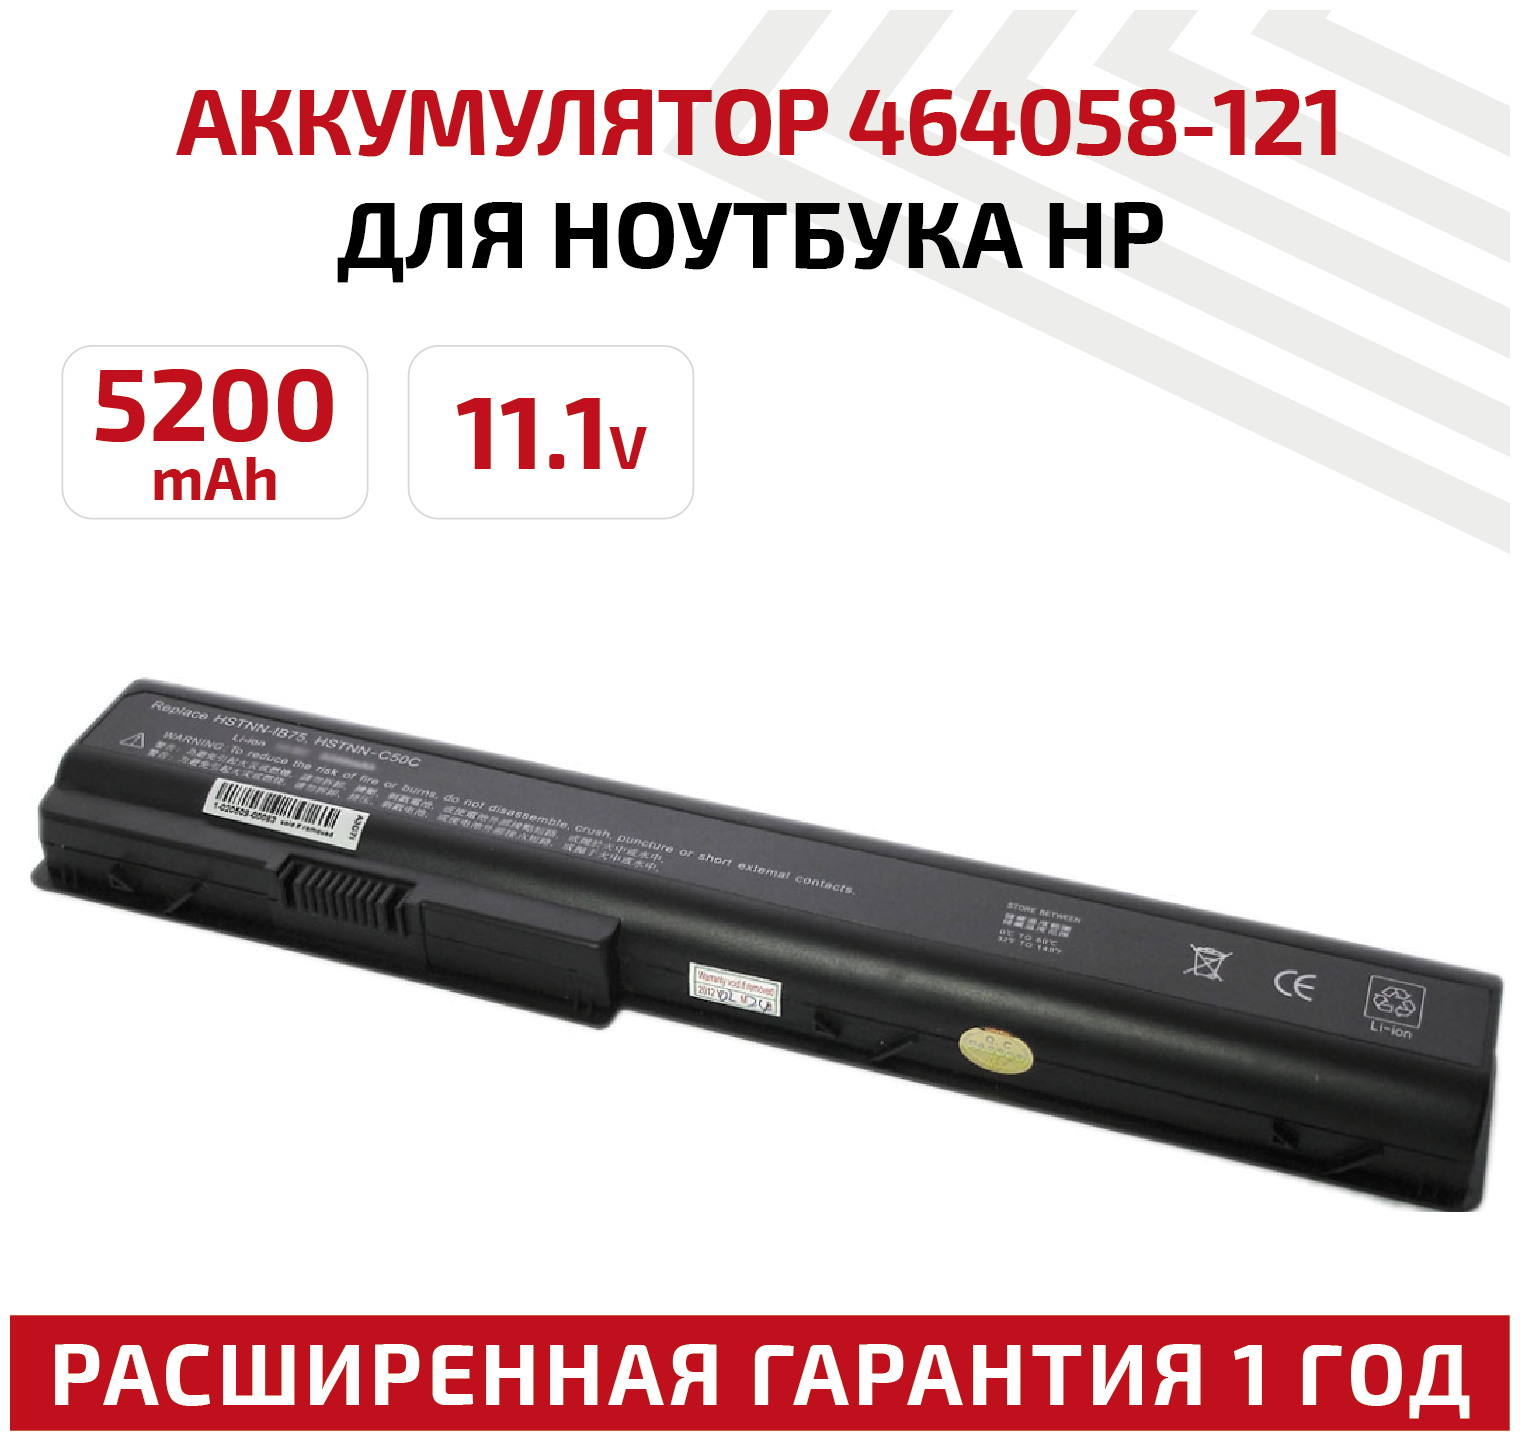 Аккумулятор (АКБ, аккумуляторная батарея) для ноутбука HP Pavilion DV7, HDX18, Compaq CQ71 5200мАч, 11.1В, черный